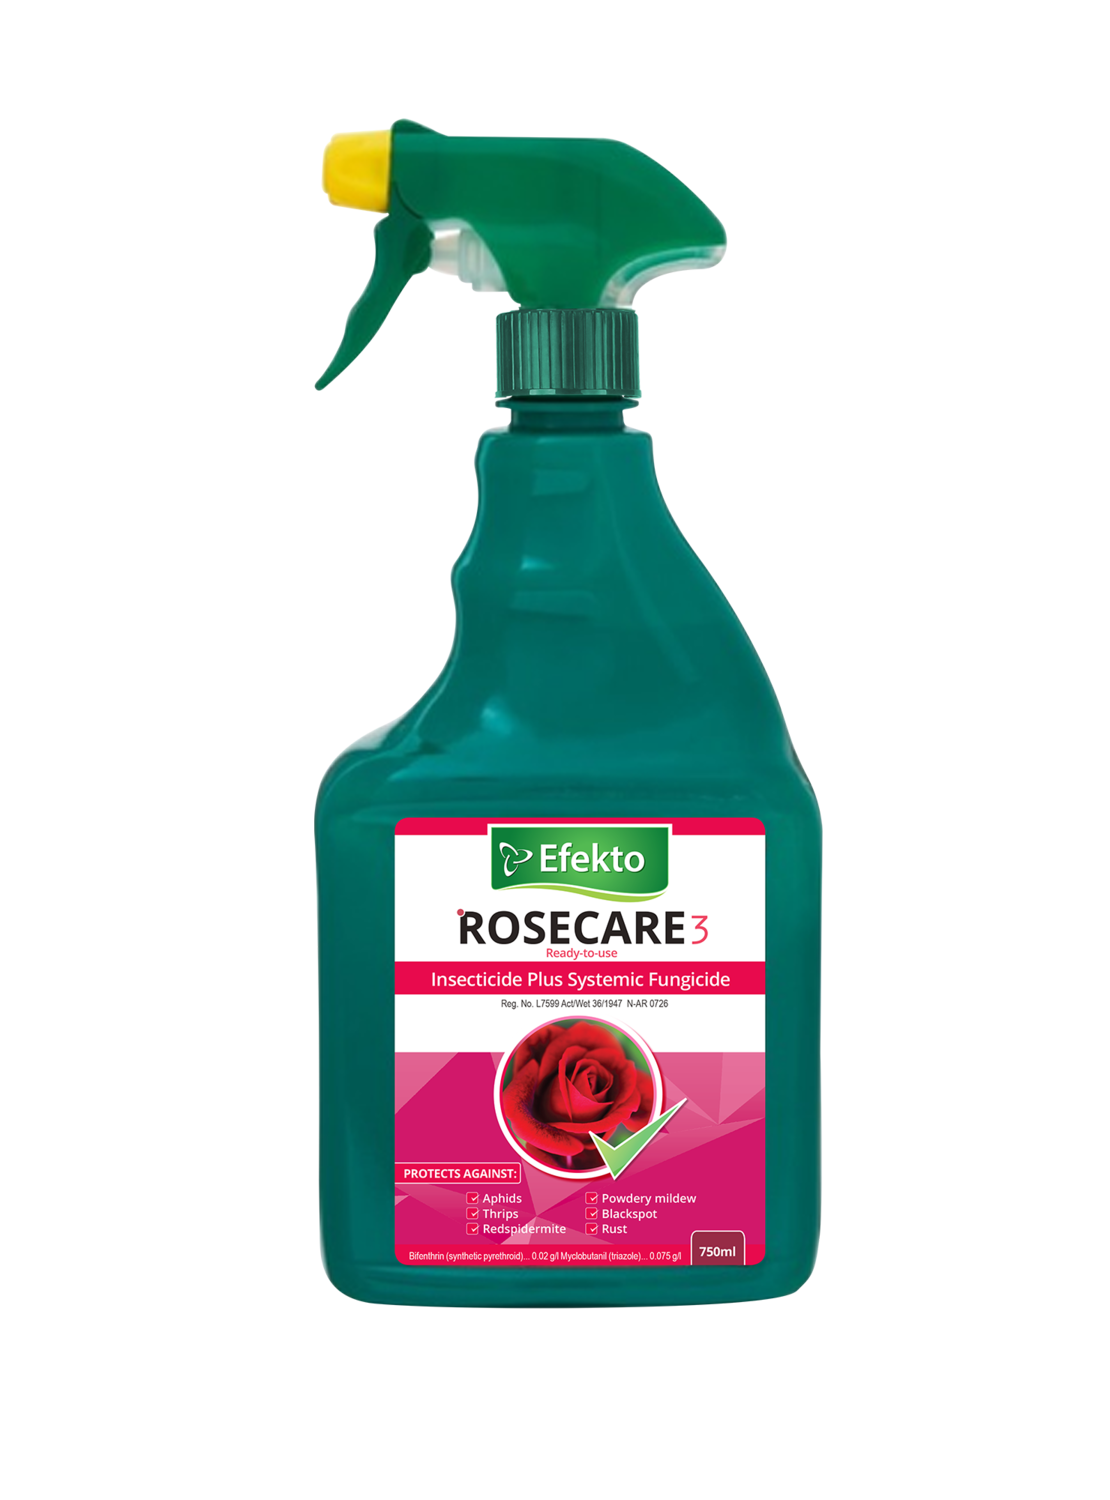 Efekto Rosecare 3 Ready To Use 750ml